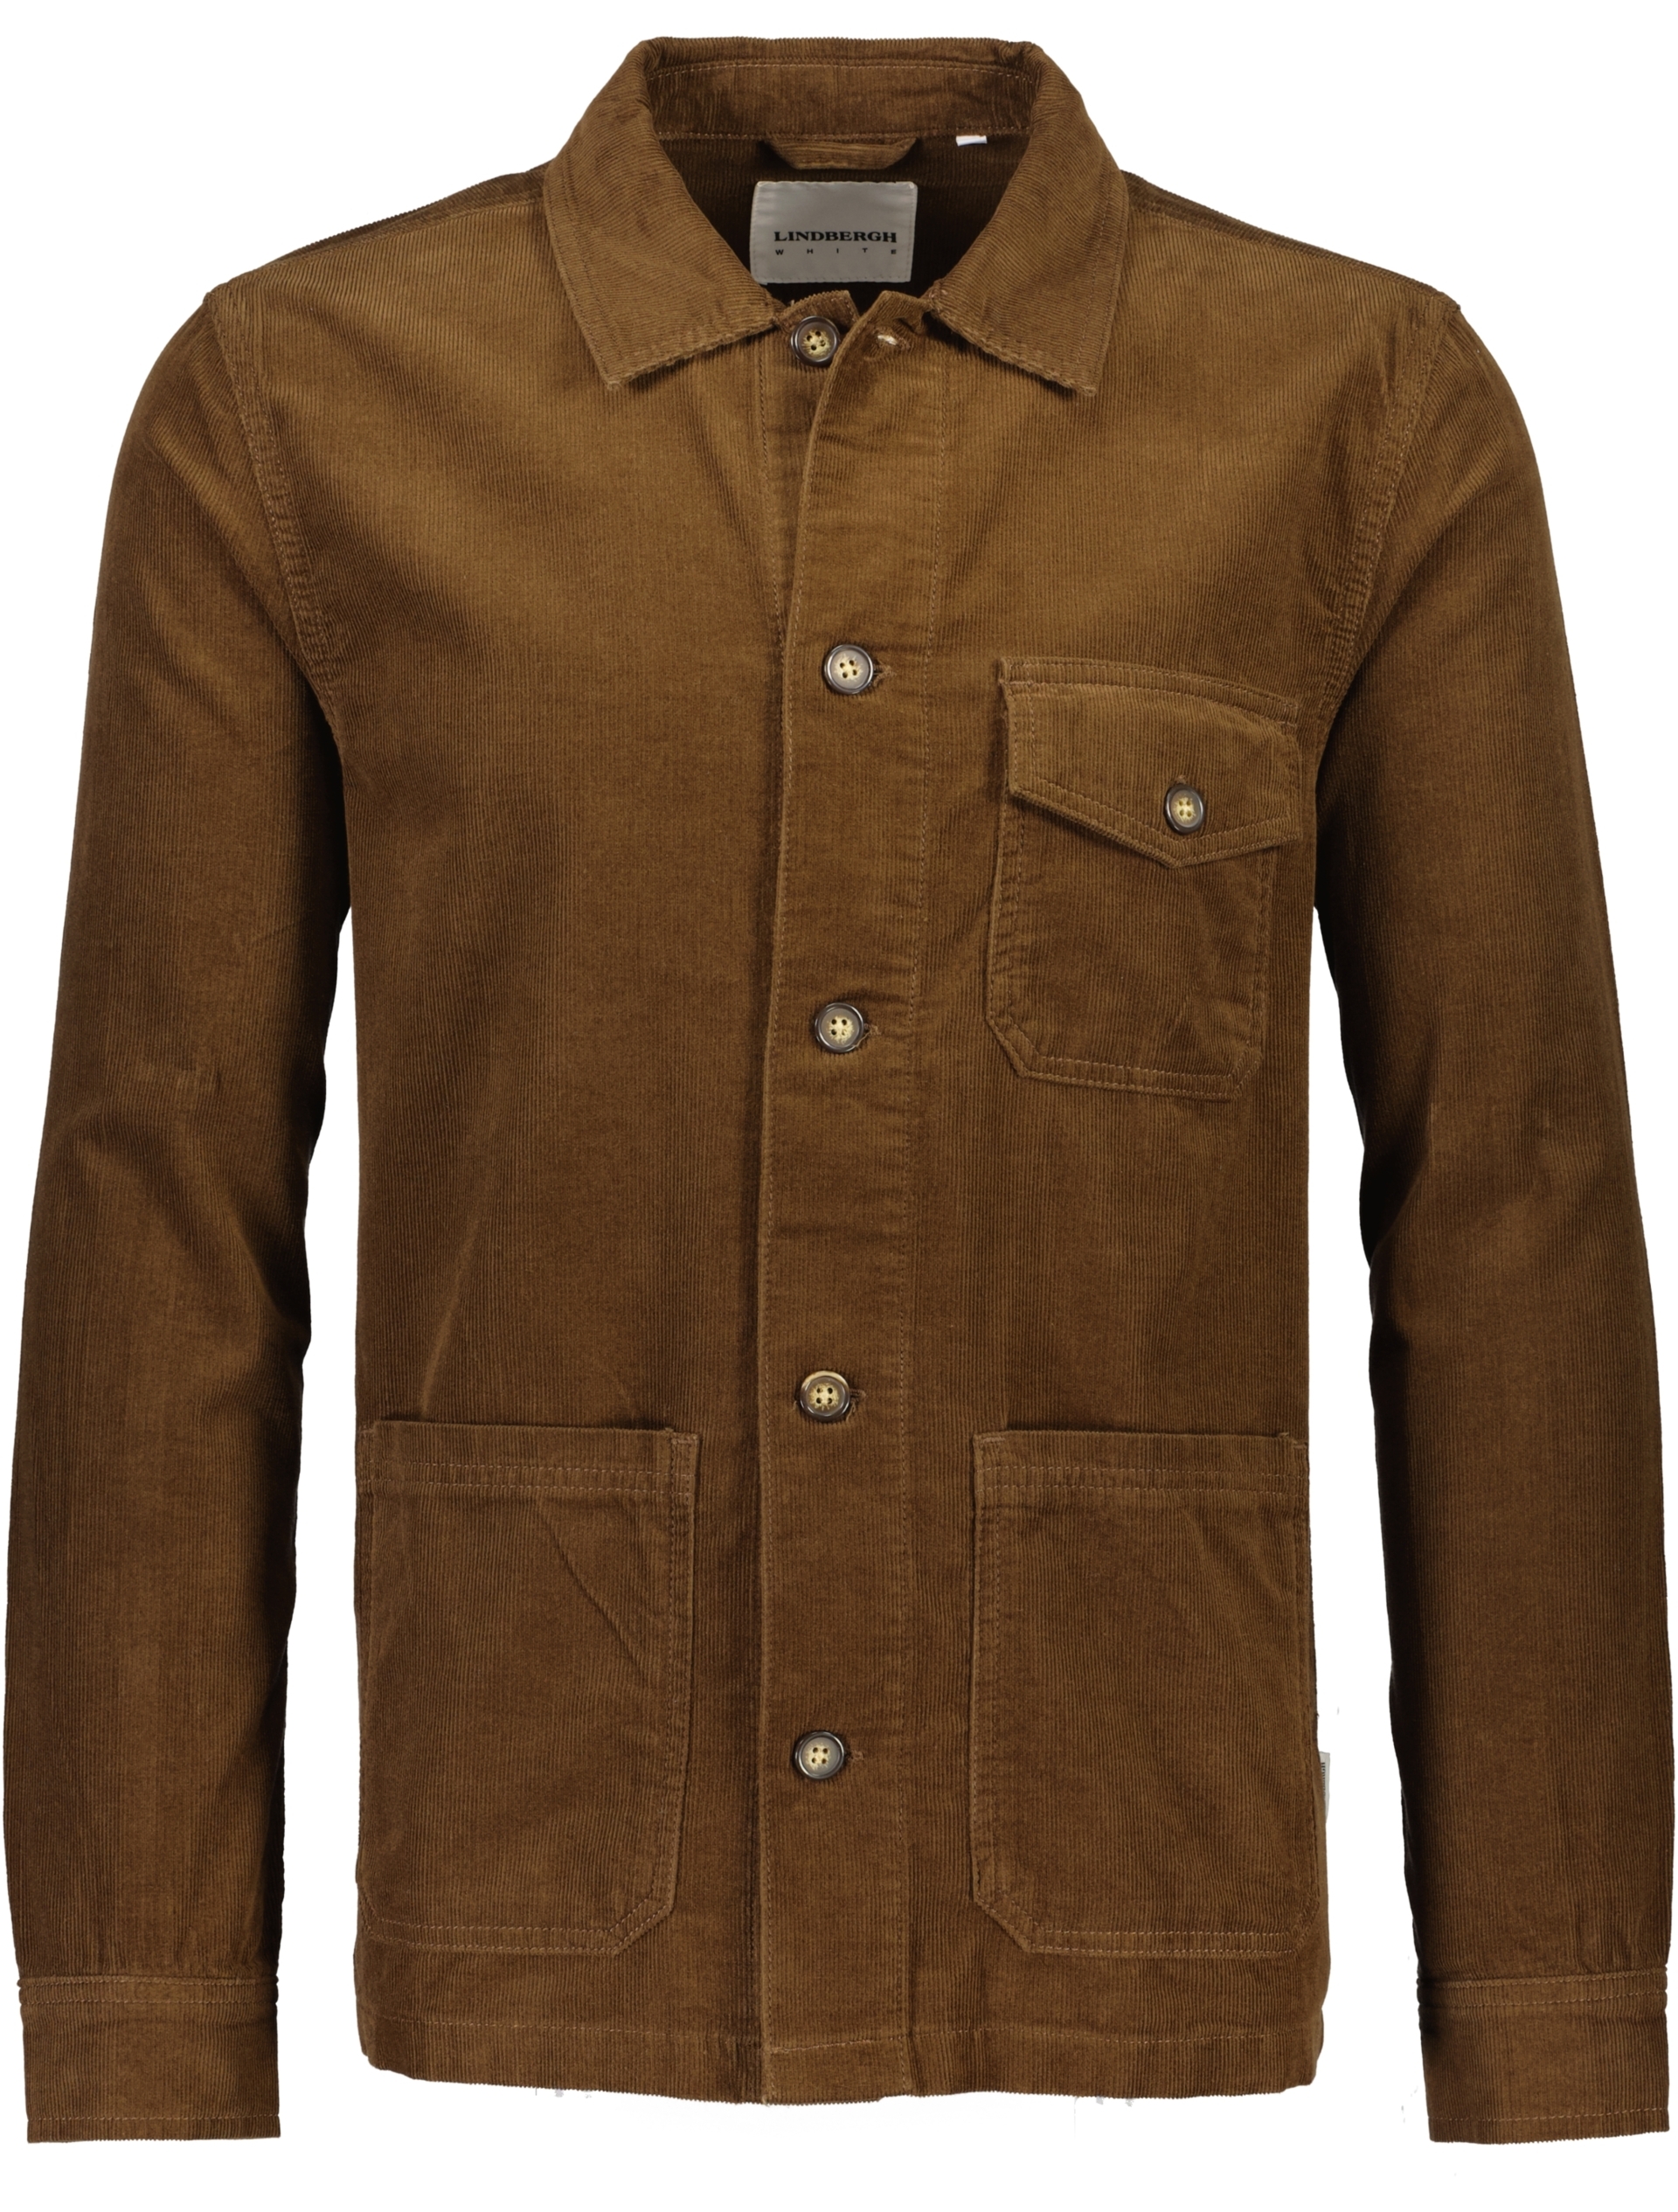 Lindbergh Corduroy overhemd bruin / brown